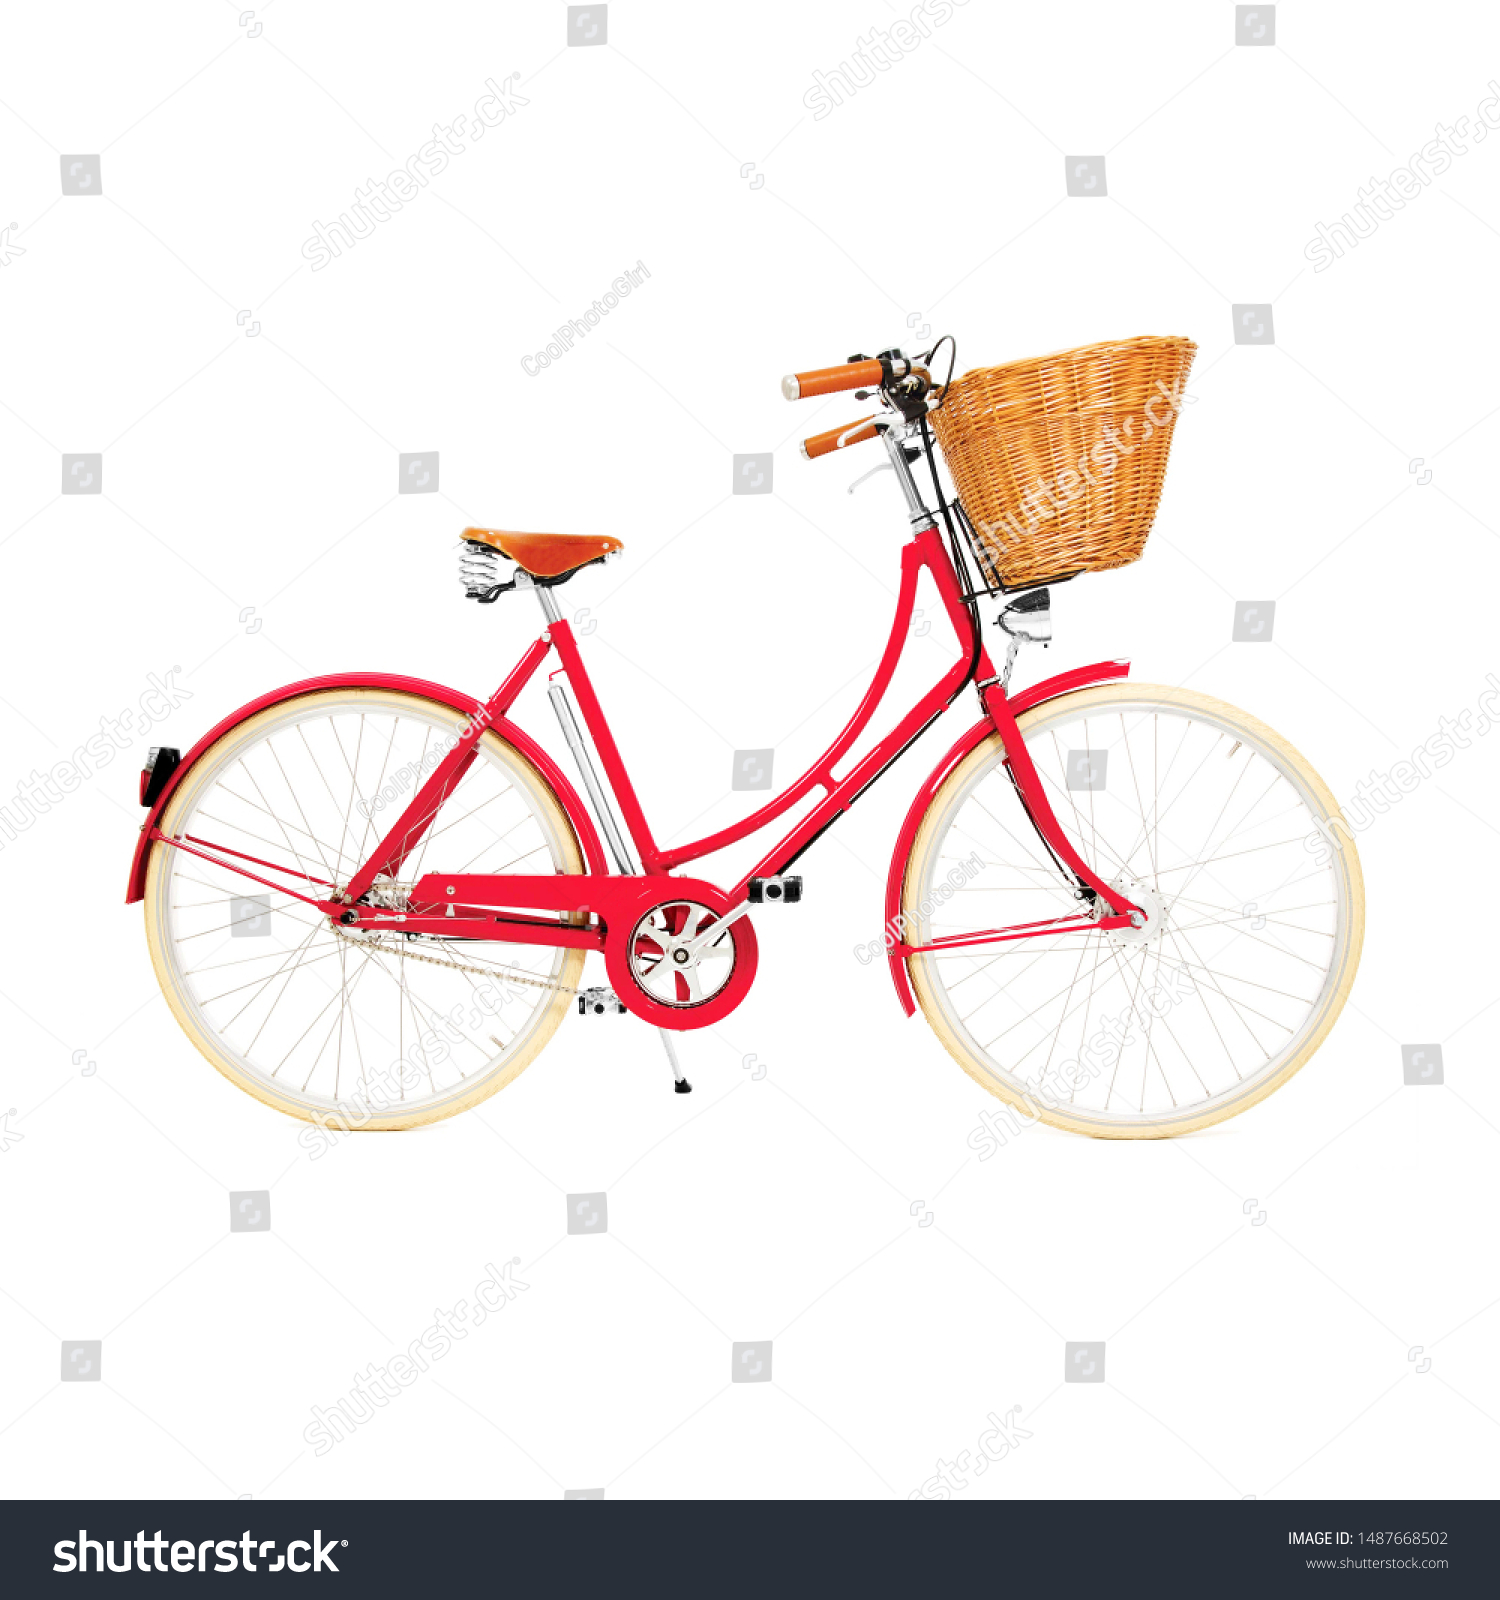 red vintage bike